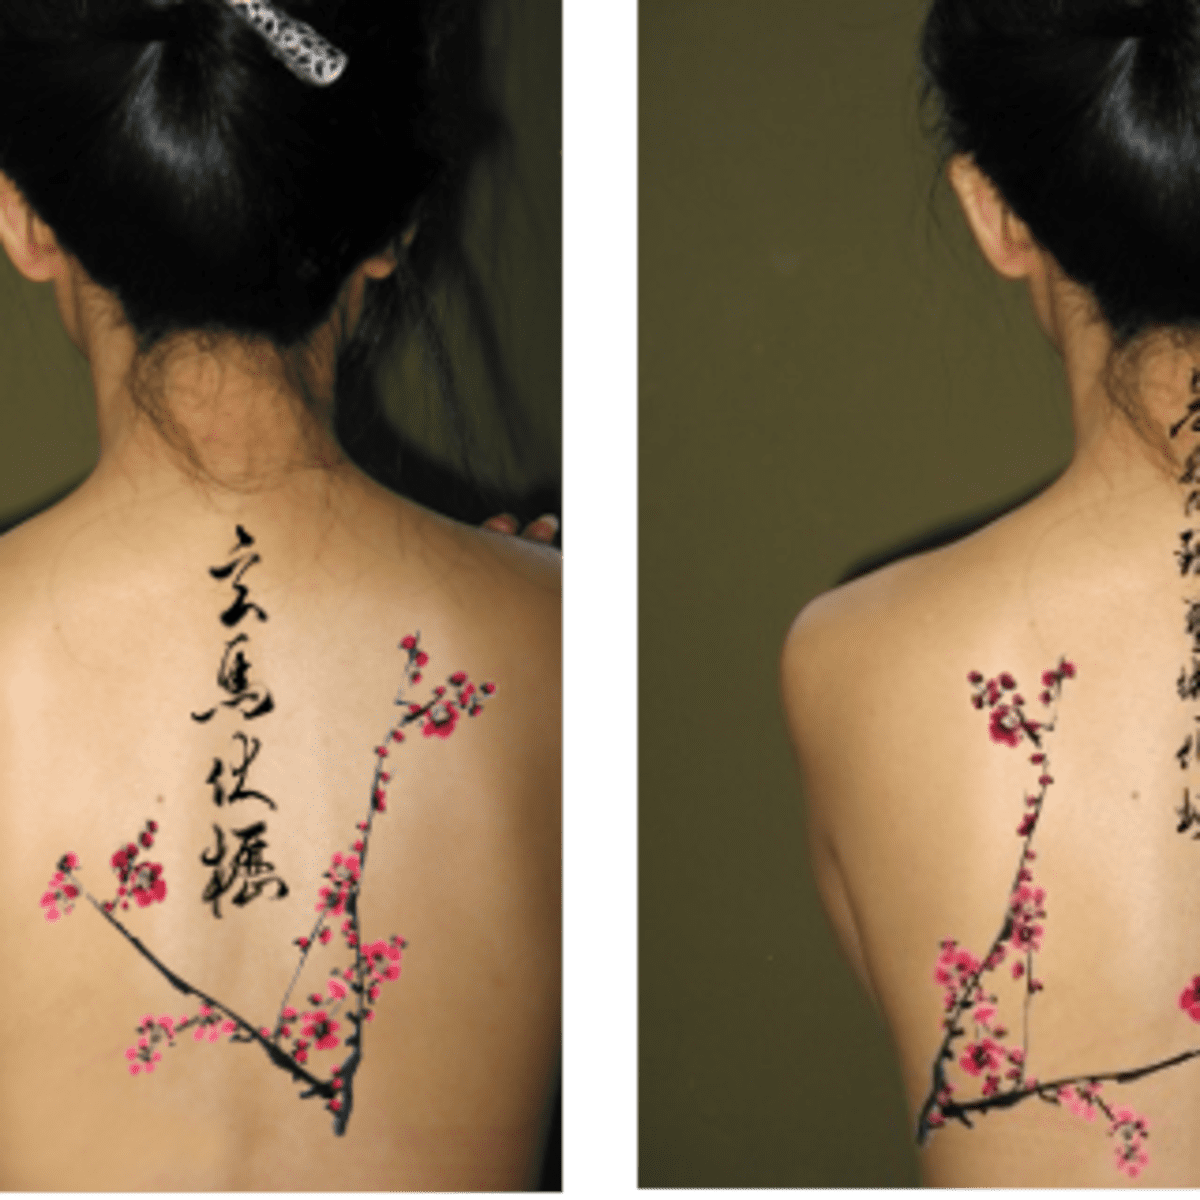 Japanese Word Tattoo  Nothing Is Permanent In Japanese Kanji Symbols   Yojijukugo 四字熟語  Yorozuya